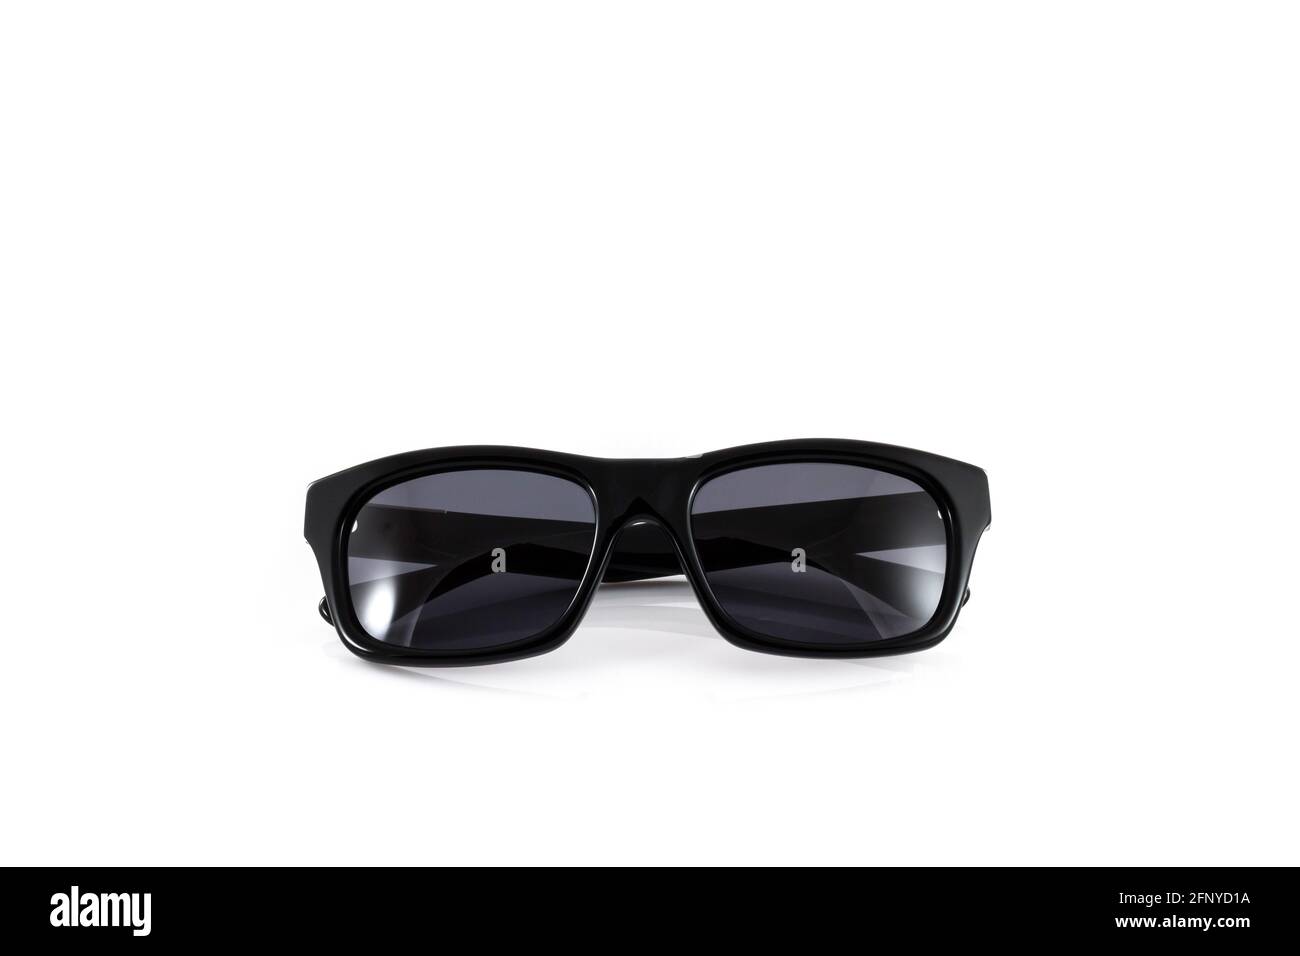 Black sunglasses isolated on a white background Stock Photo - Alamy